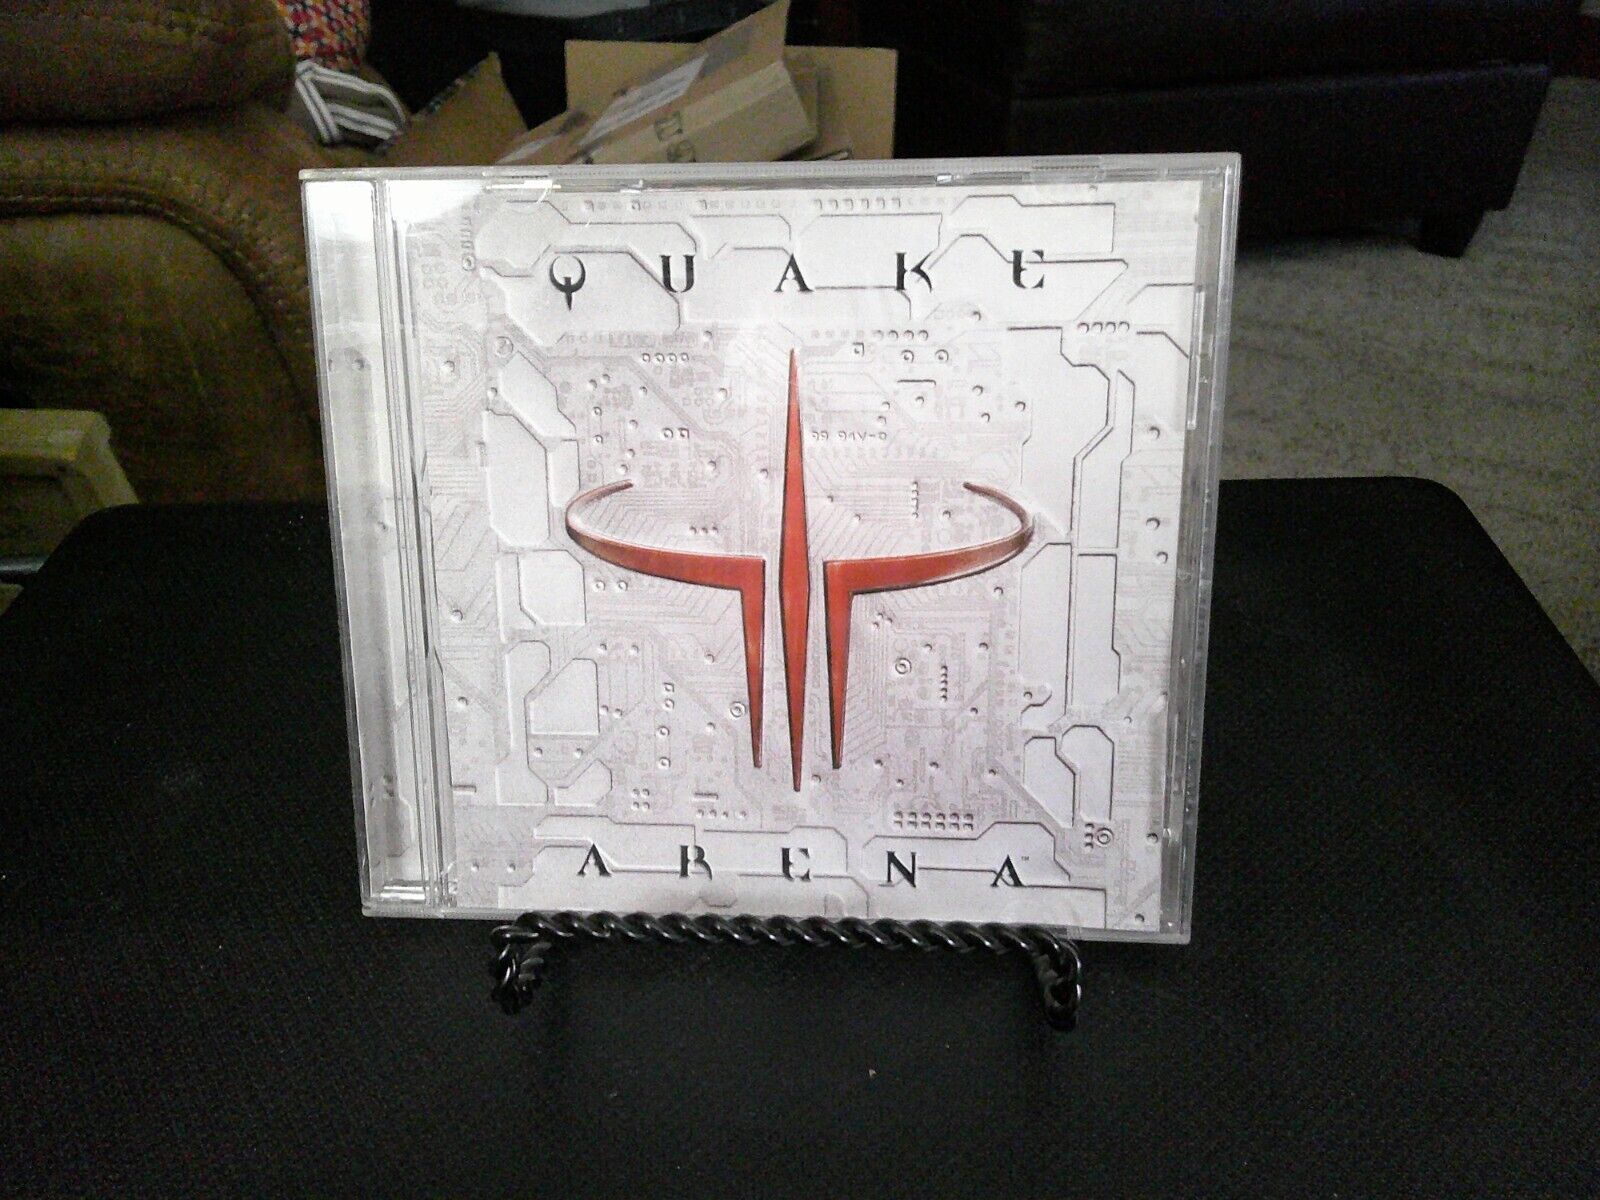 Primary image for Quake III Arena (PC, 1999)